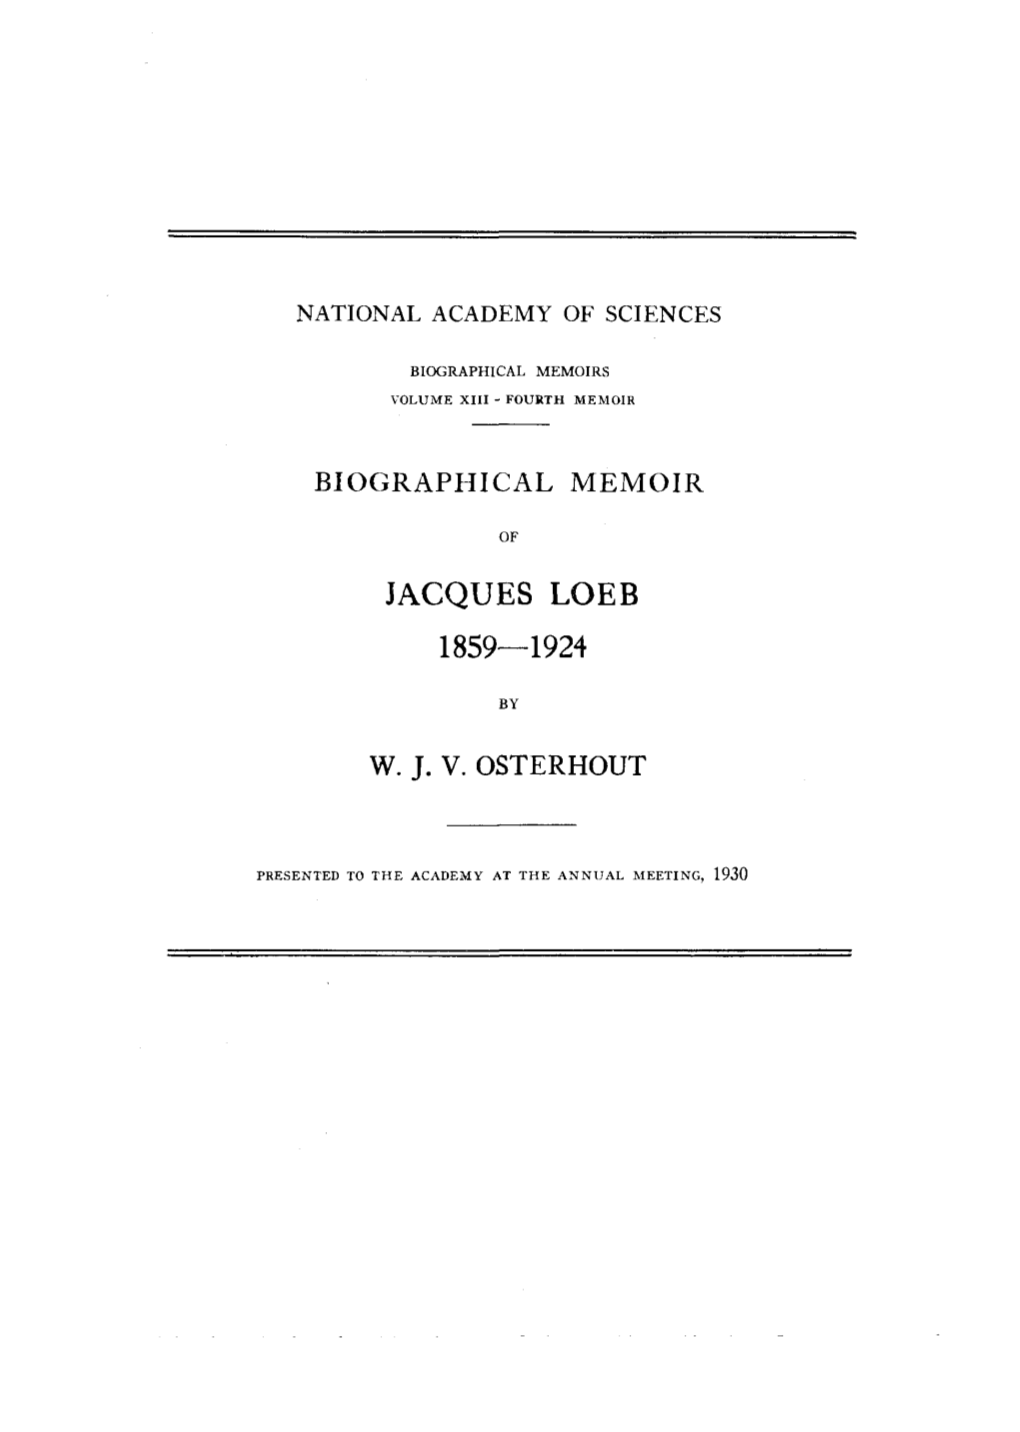 Jacques Loeb 1859—1924